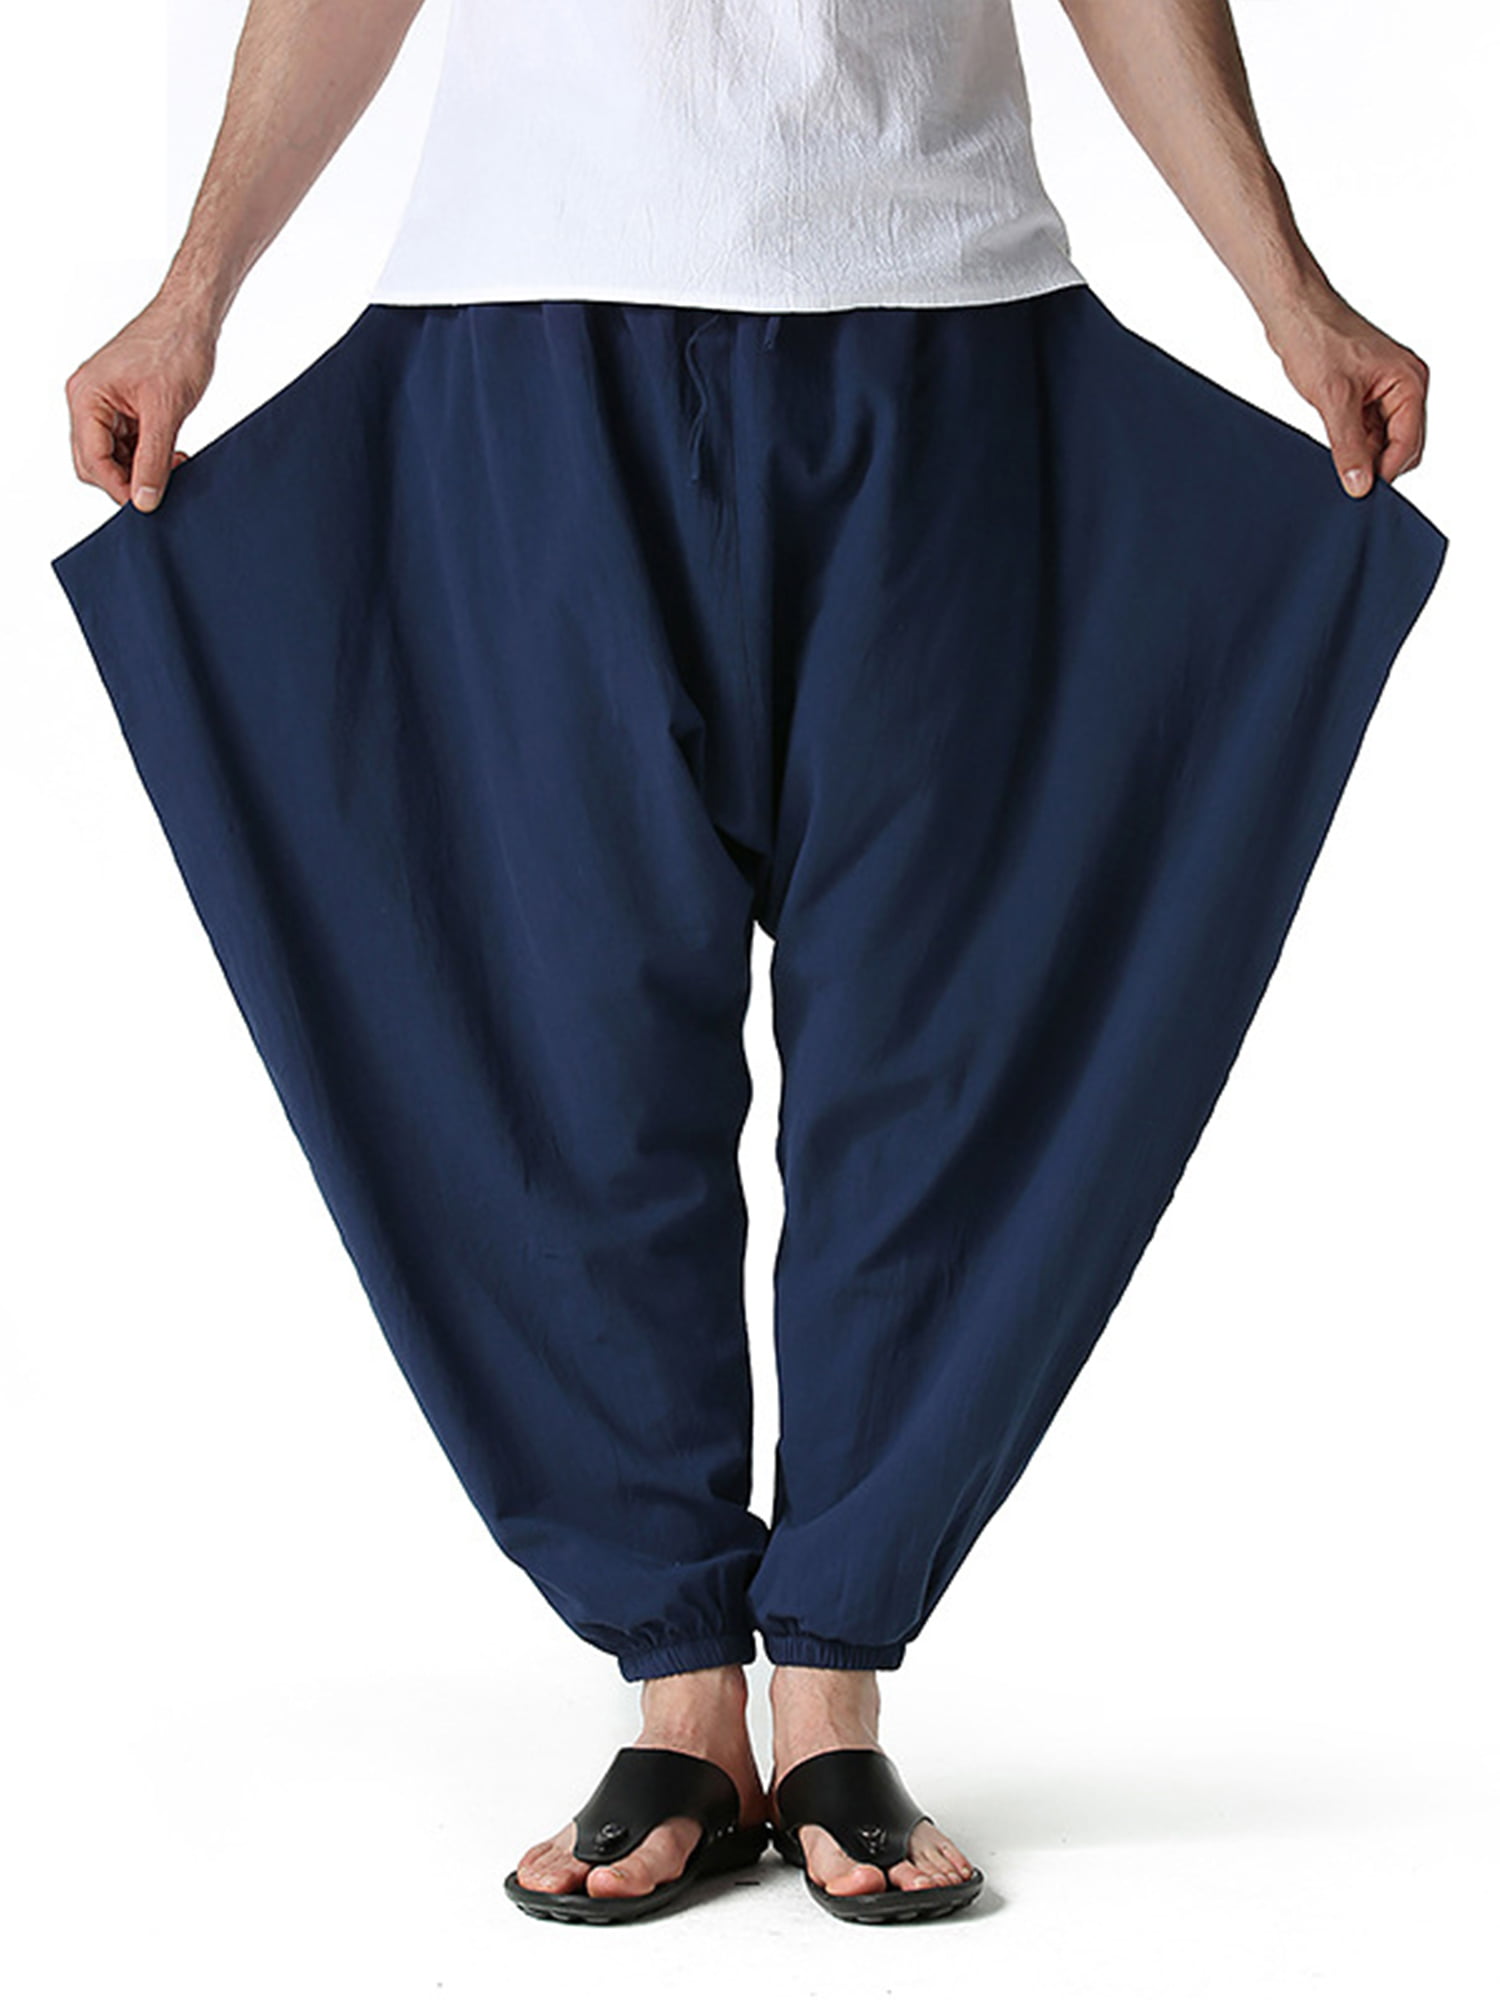 Ankle Length Pants for Men Striped Harem Jogger with Drawstring Yoga Trousers Skinny Dress Capri Fashion Elastic Waistband 